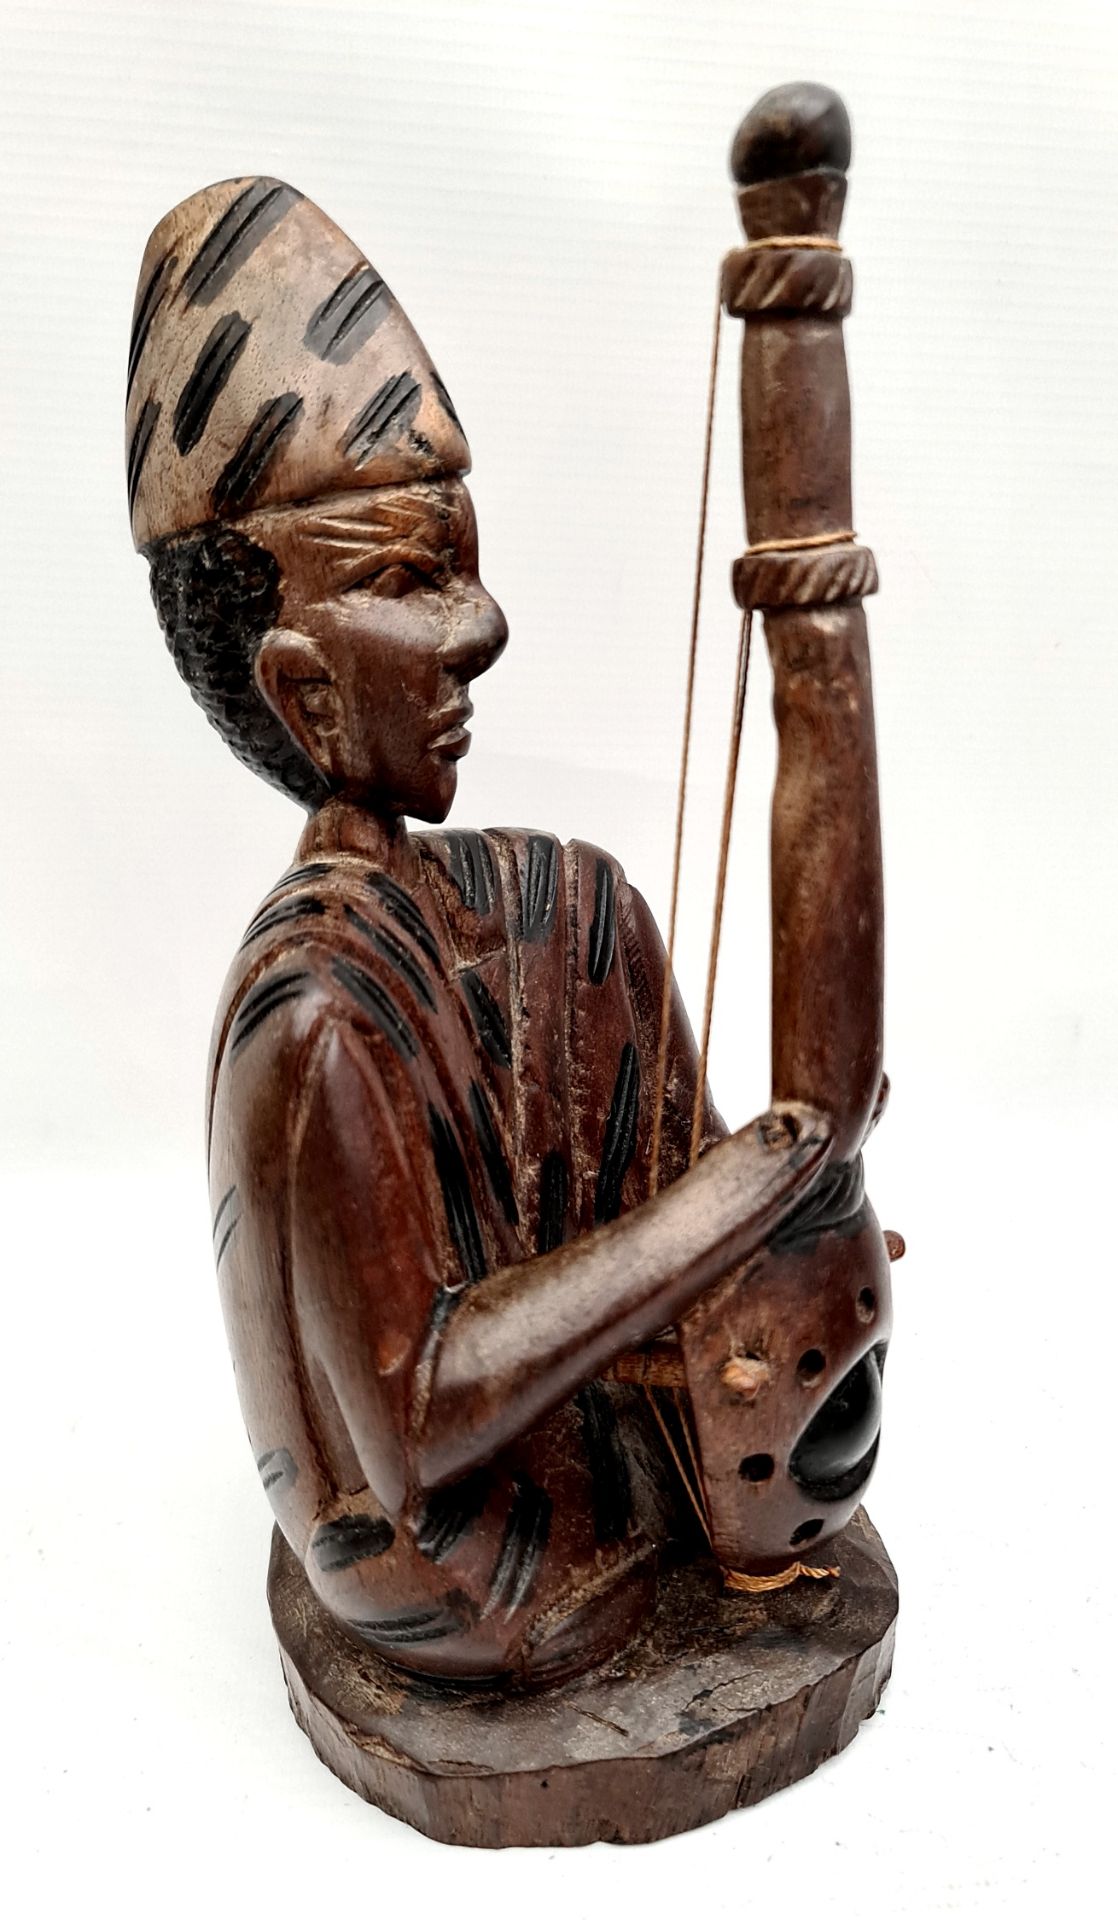 Vintage Asian Carved Sculpture Musician Figure - Image 2 of 3